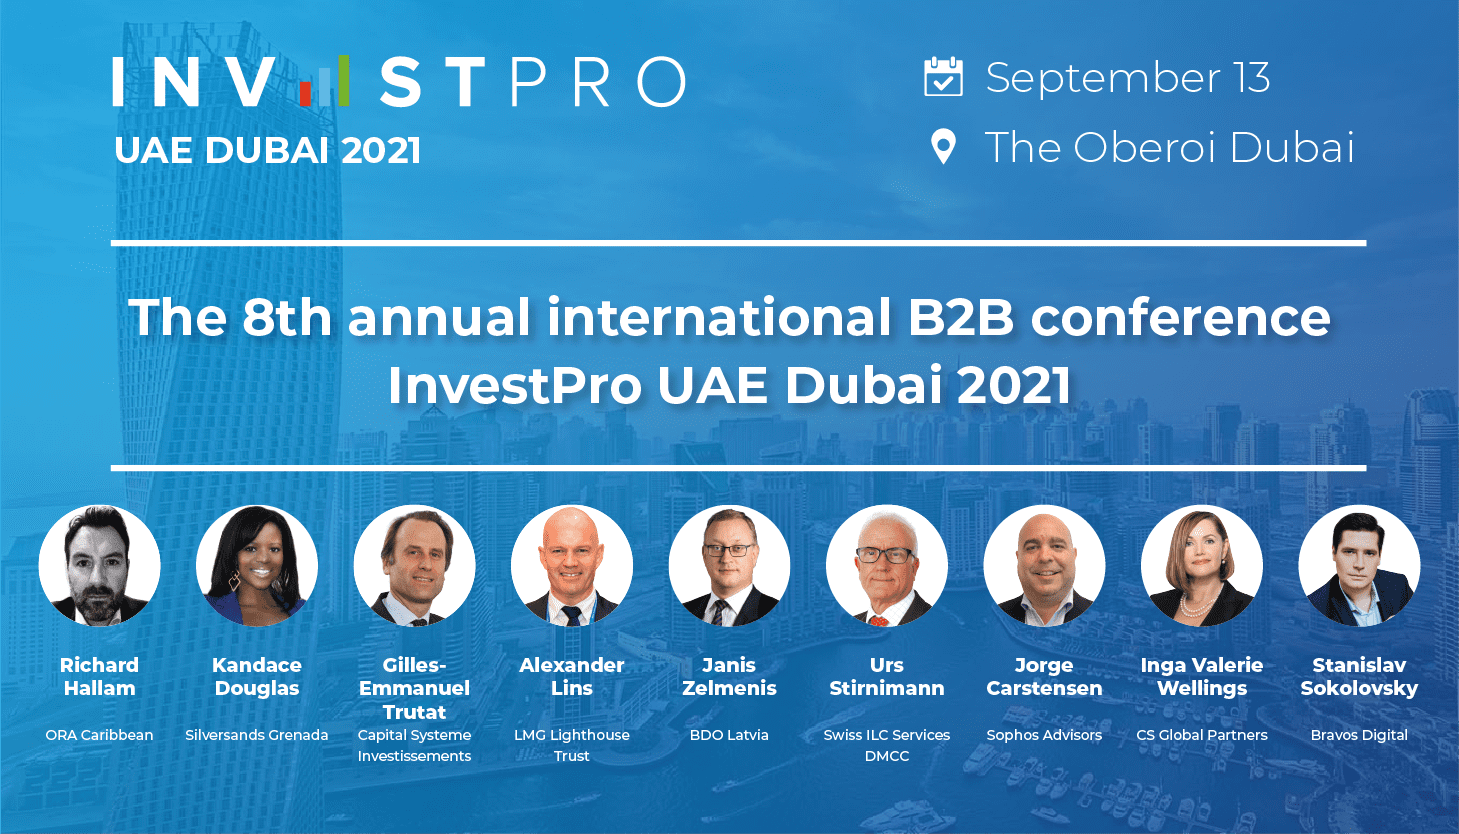 Bosco Conference Invites You to Participate in the 8th Annual International B2B Conference InvestPro UAE Dubai 2021